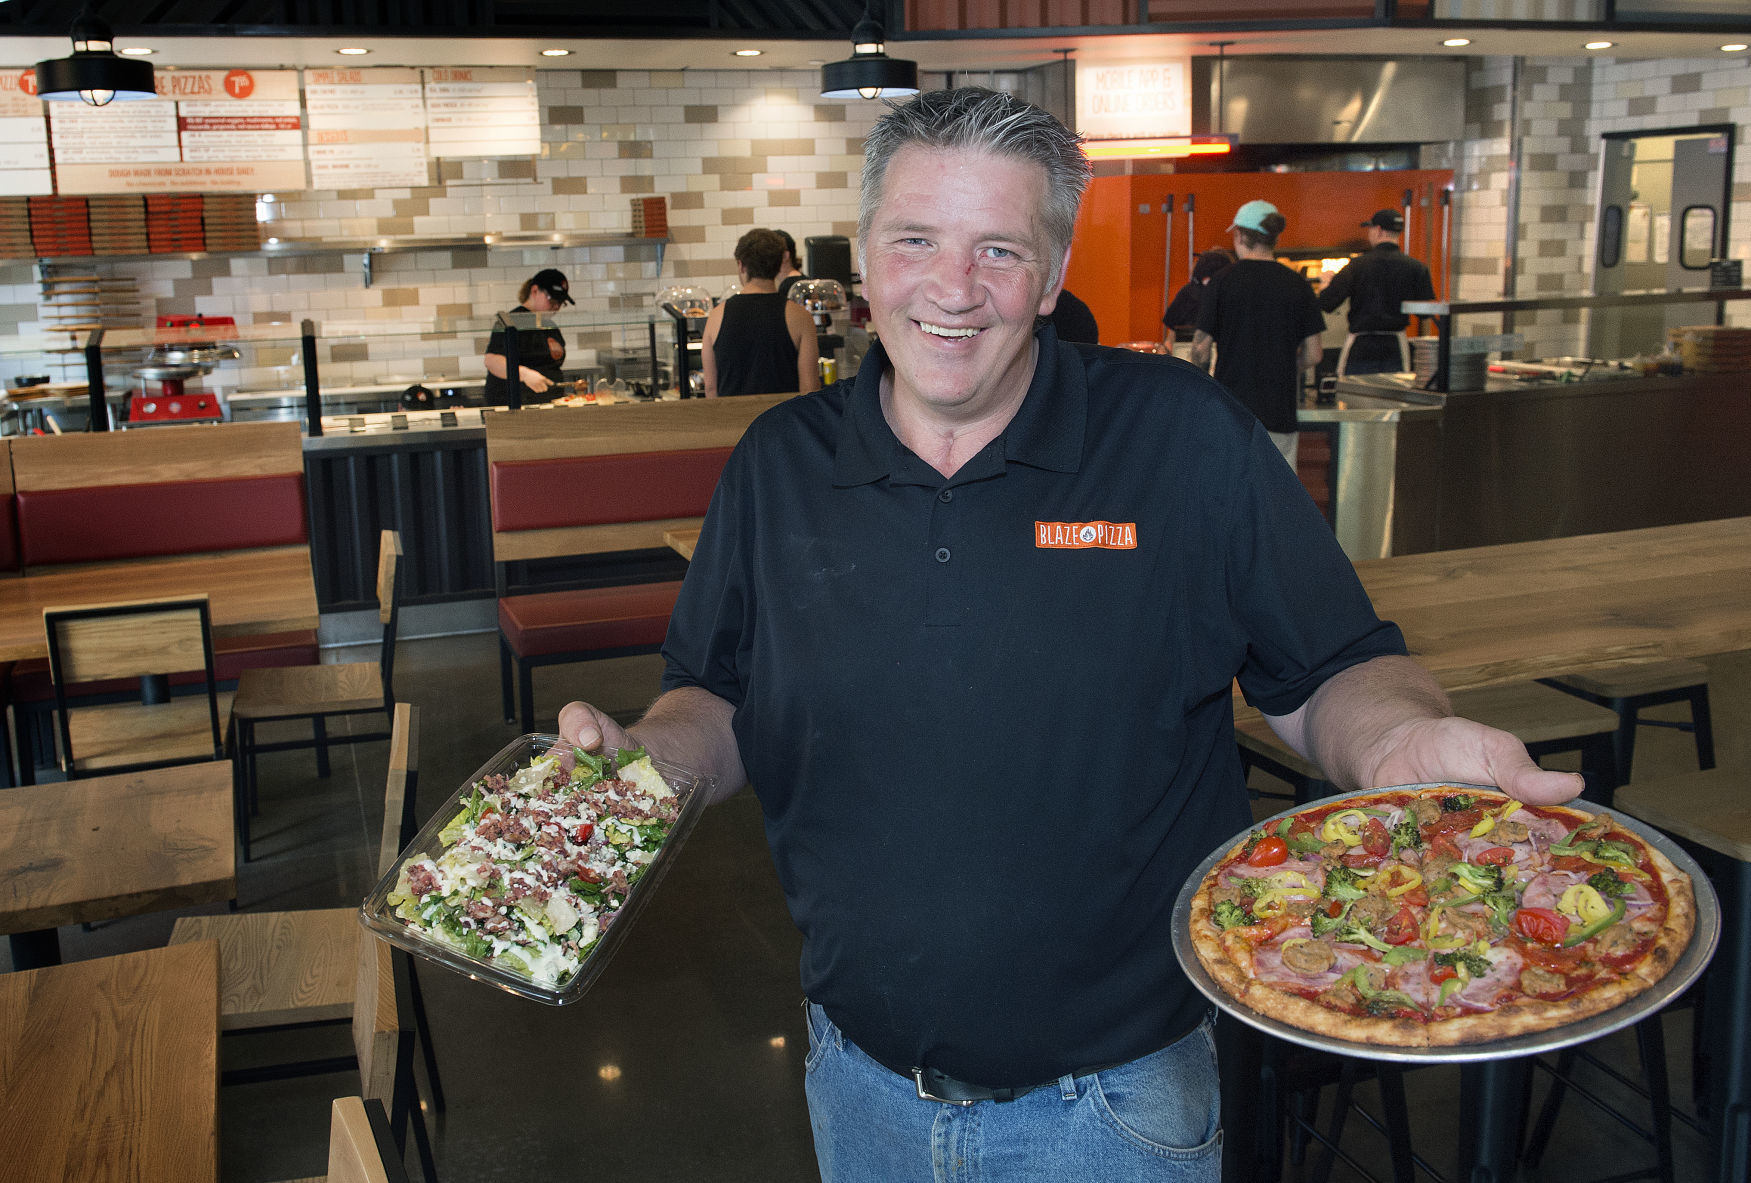 blaze pizza owner lebron james